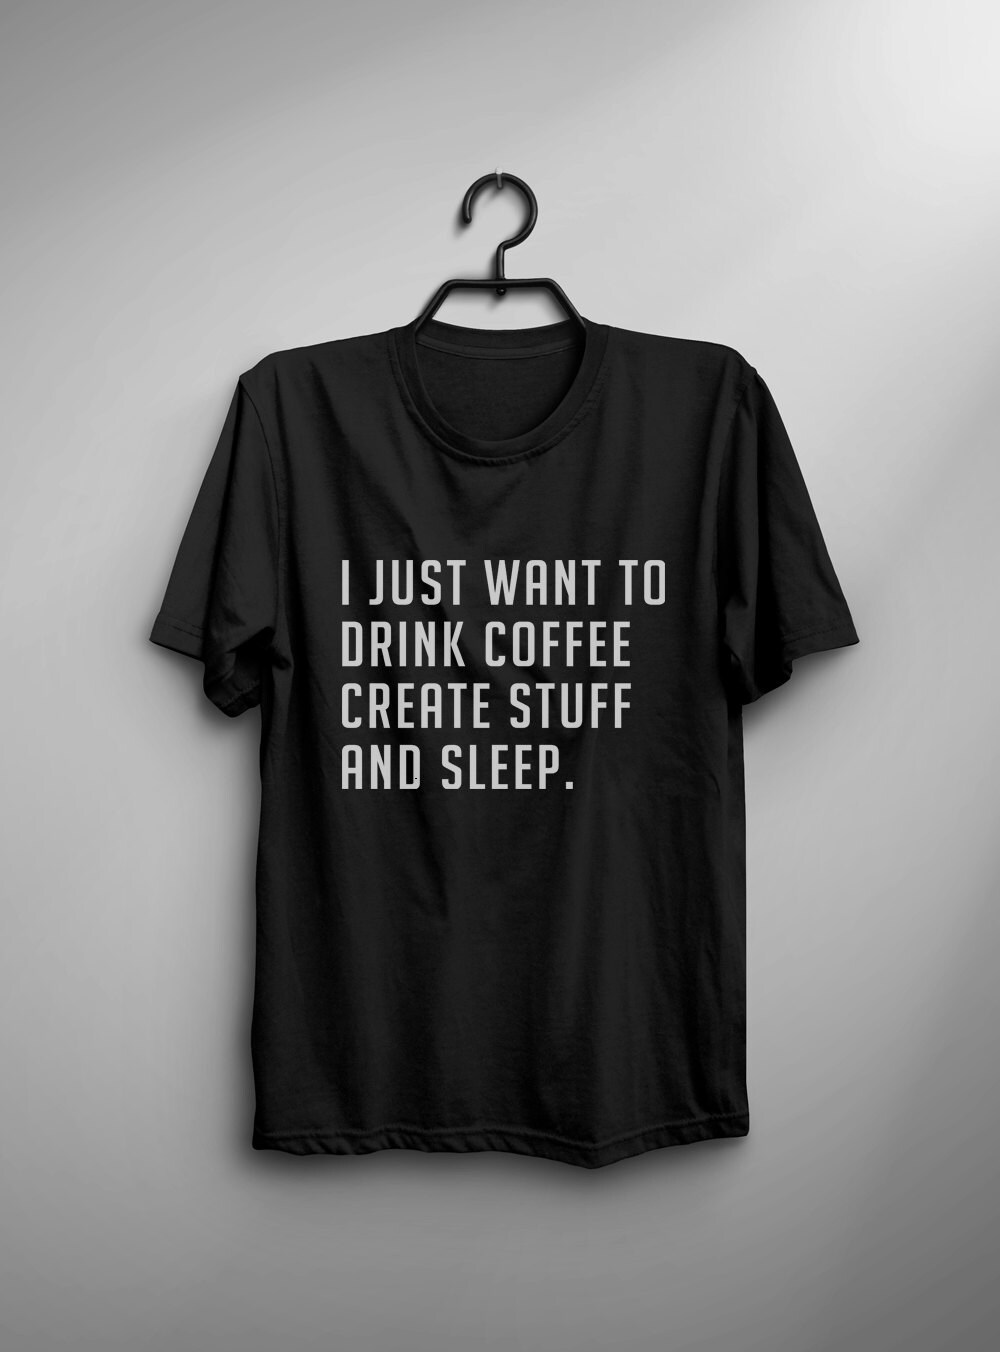 Coffee gift funny tshirt Tumblr Tee Shirts for teens gift | Etsy